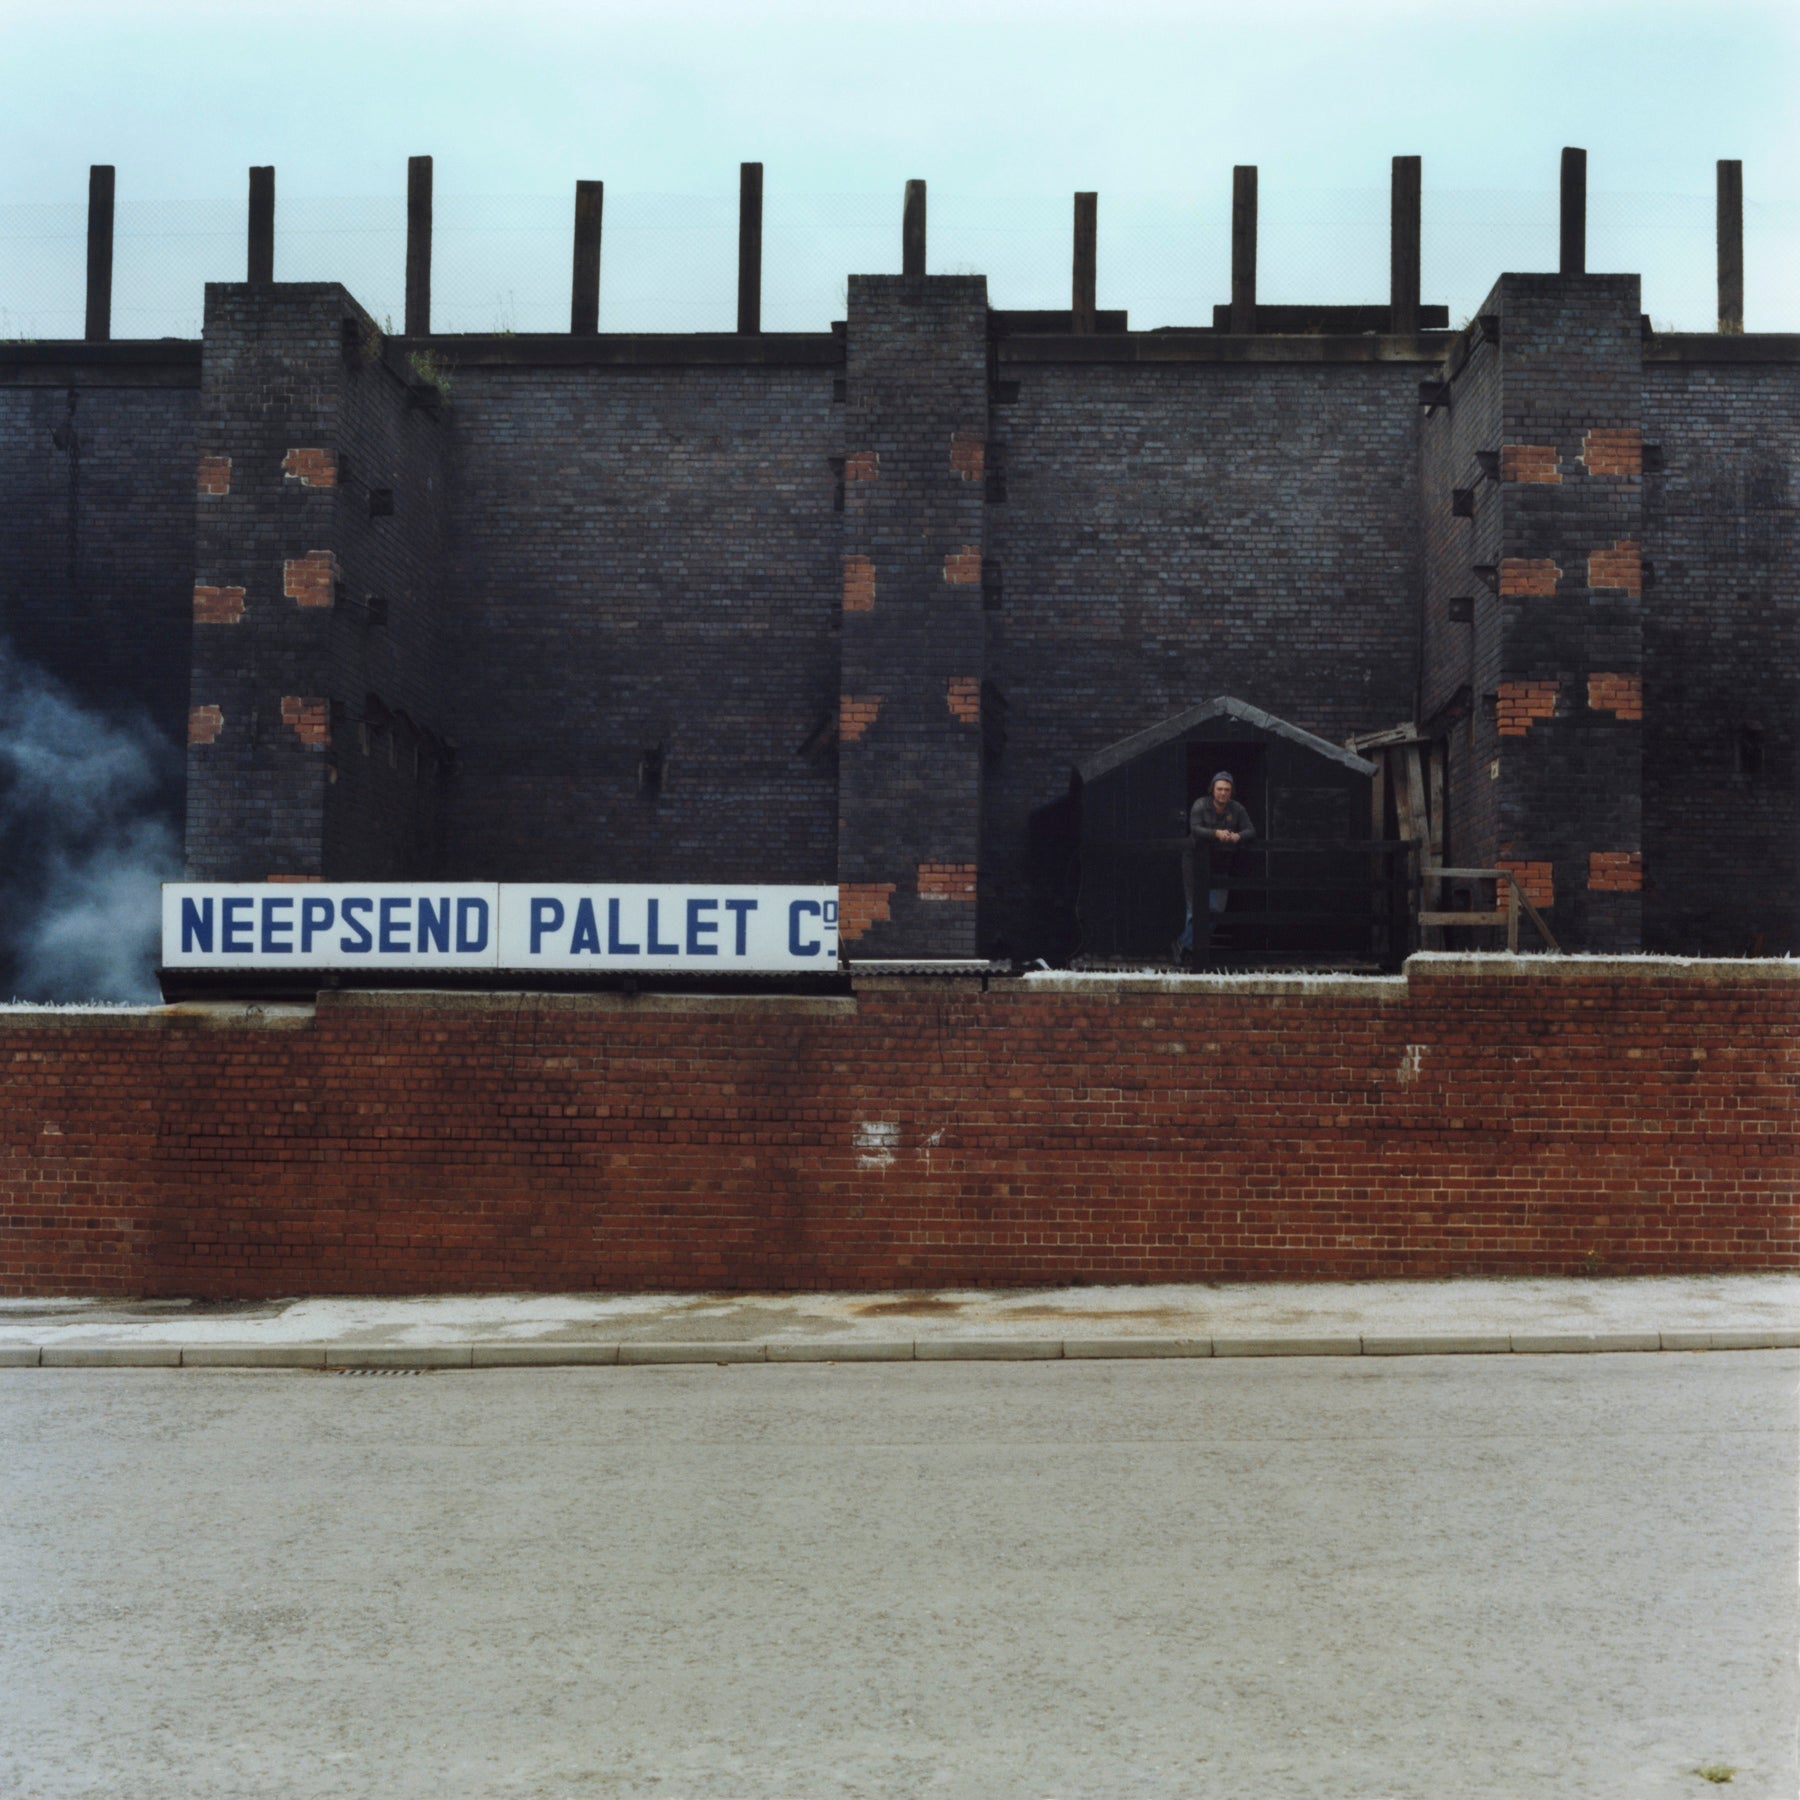 Bill Henderson, Hayland Street, Sheffield, 1978 - 7x9" Print